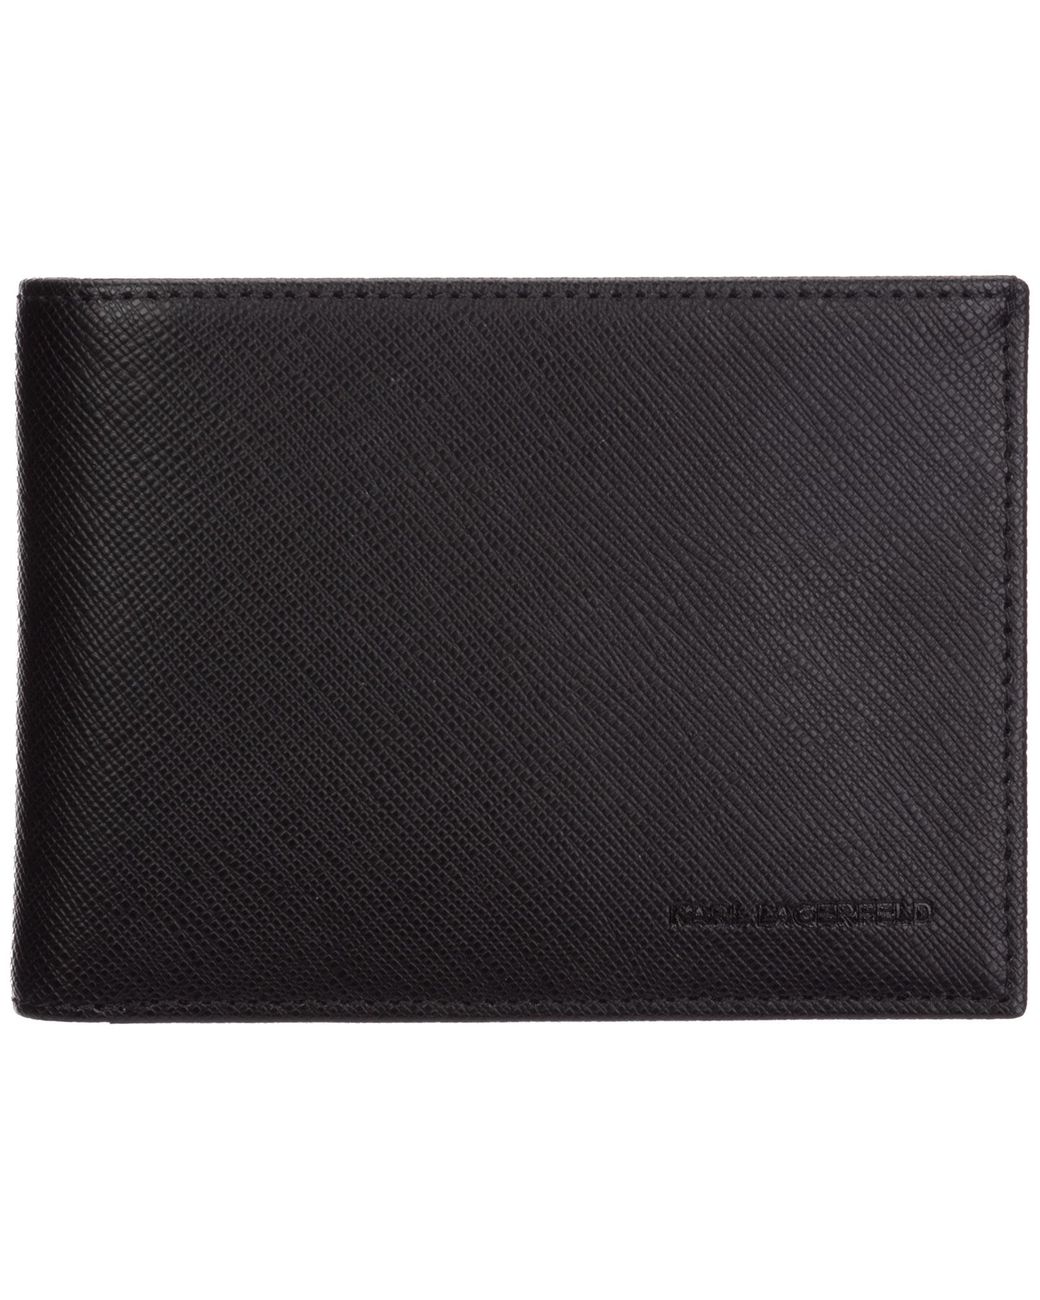 Karl Lagerfeld Men's Genuine Leather Wallet Credit Card Bifold in Nero ...